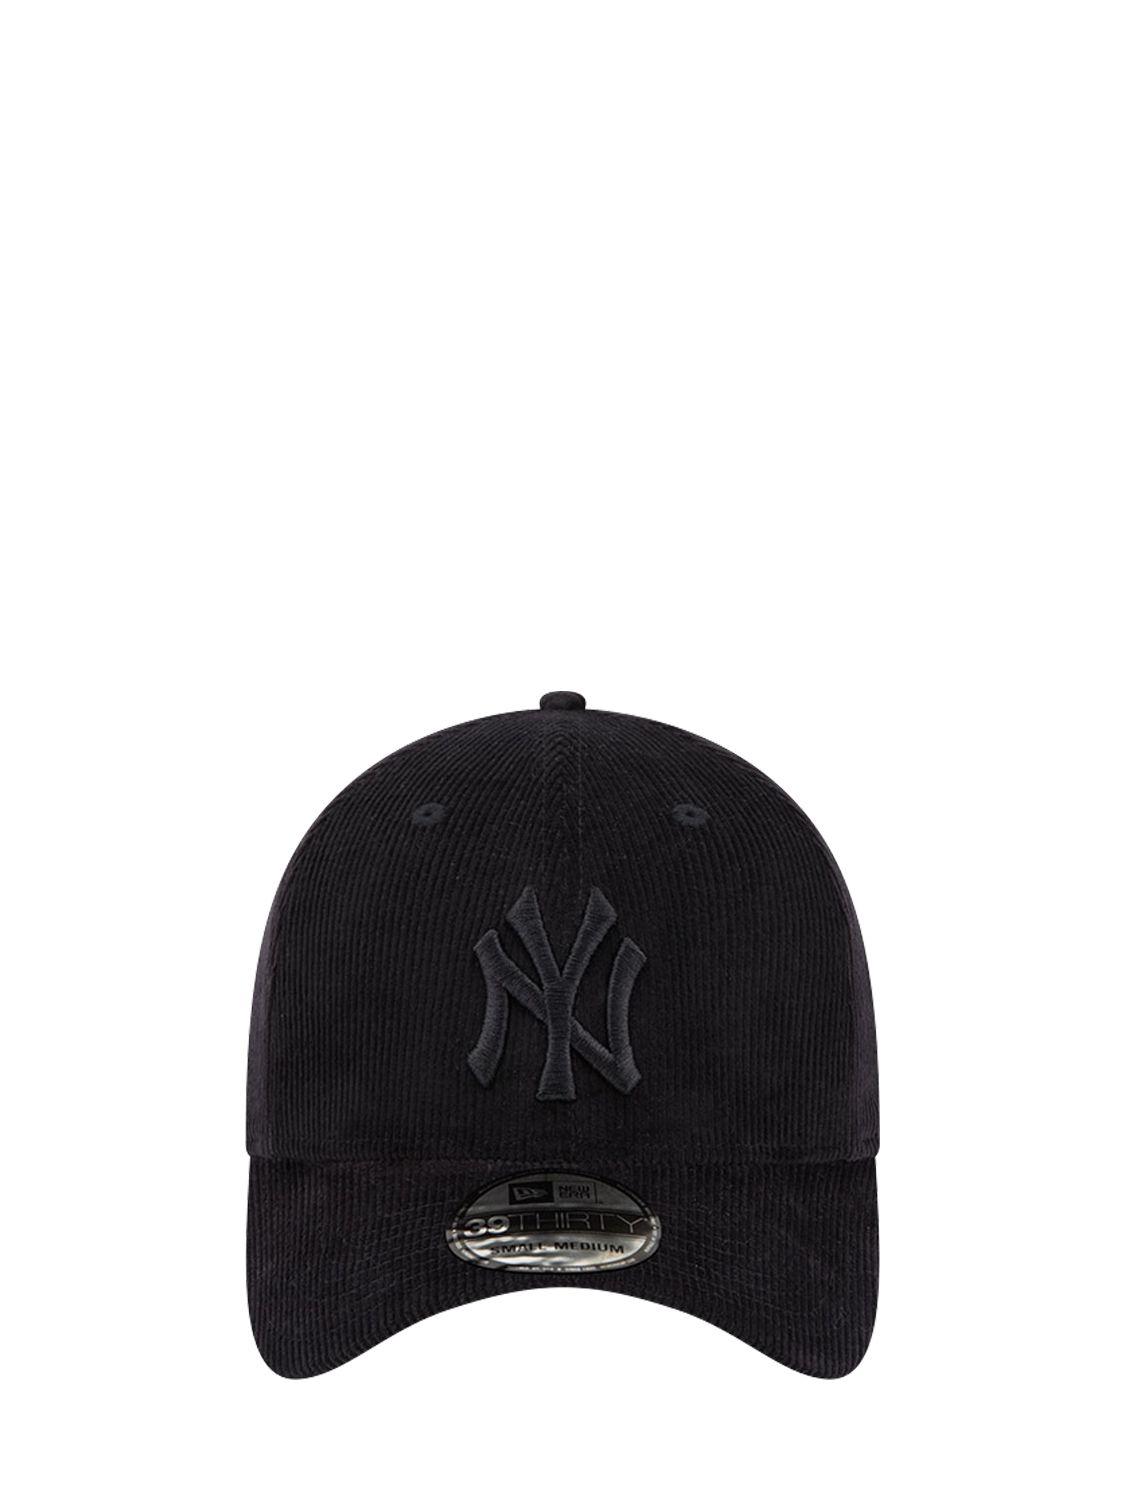 Cord 39thirty New York Yankees Cap